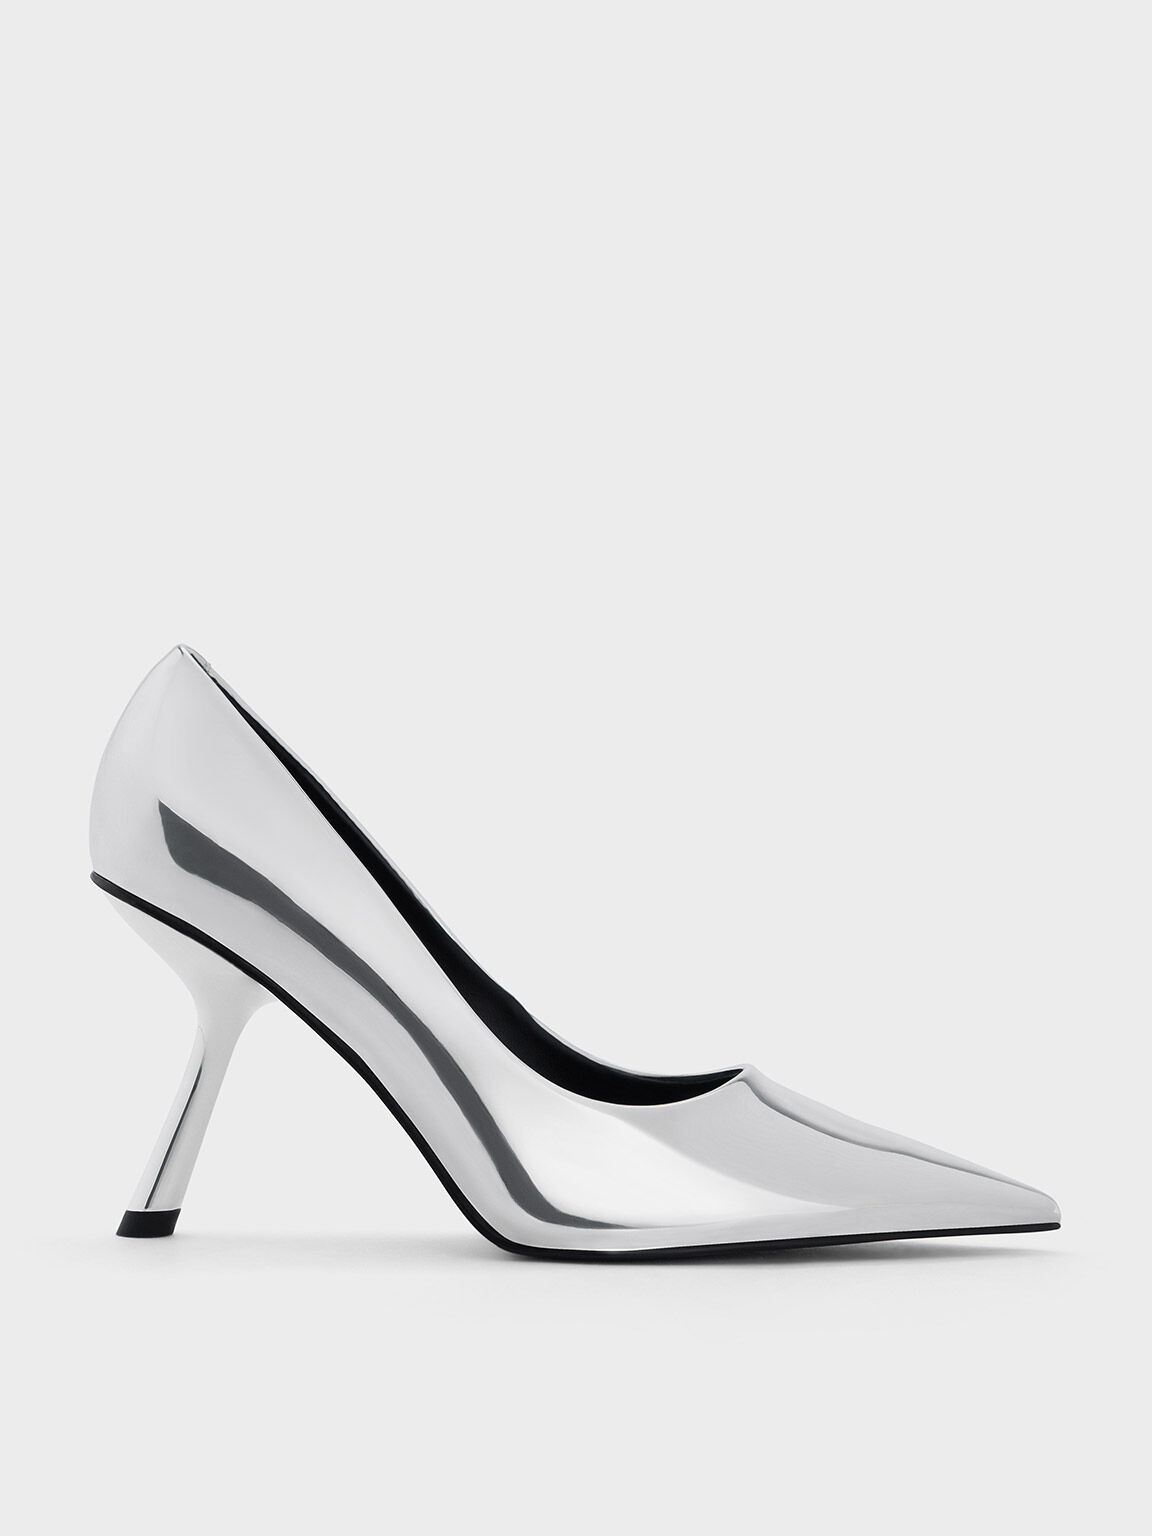 Silver Heels | Block & High Heeled Silver Sandals | ASOS